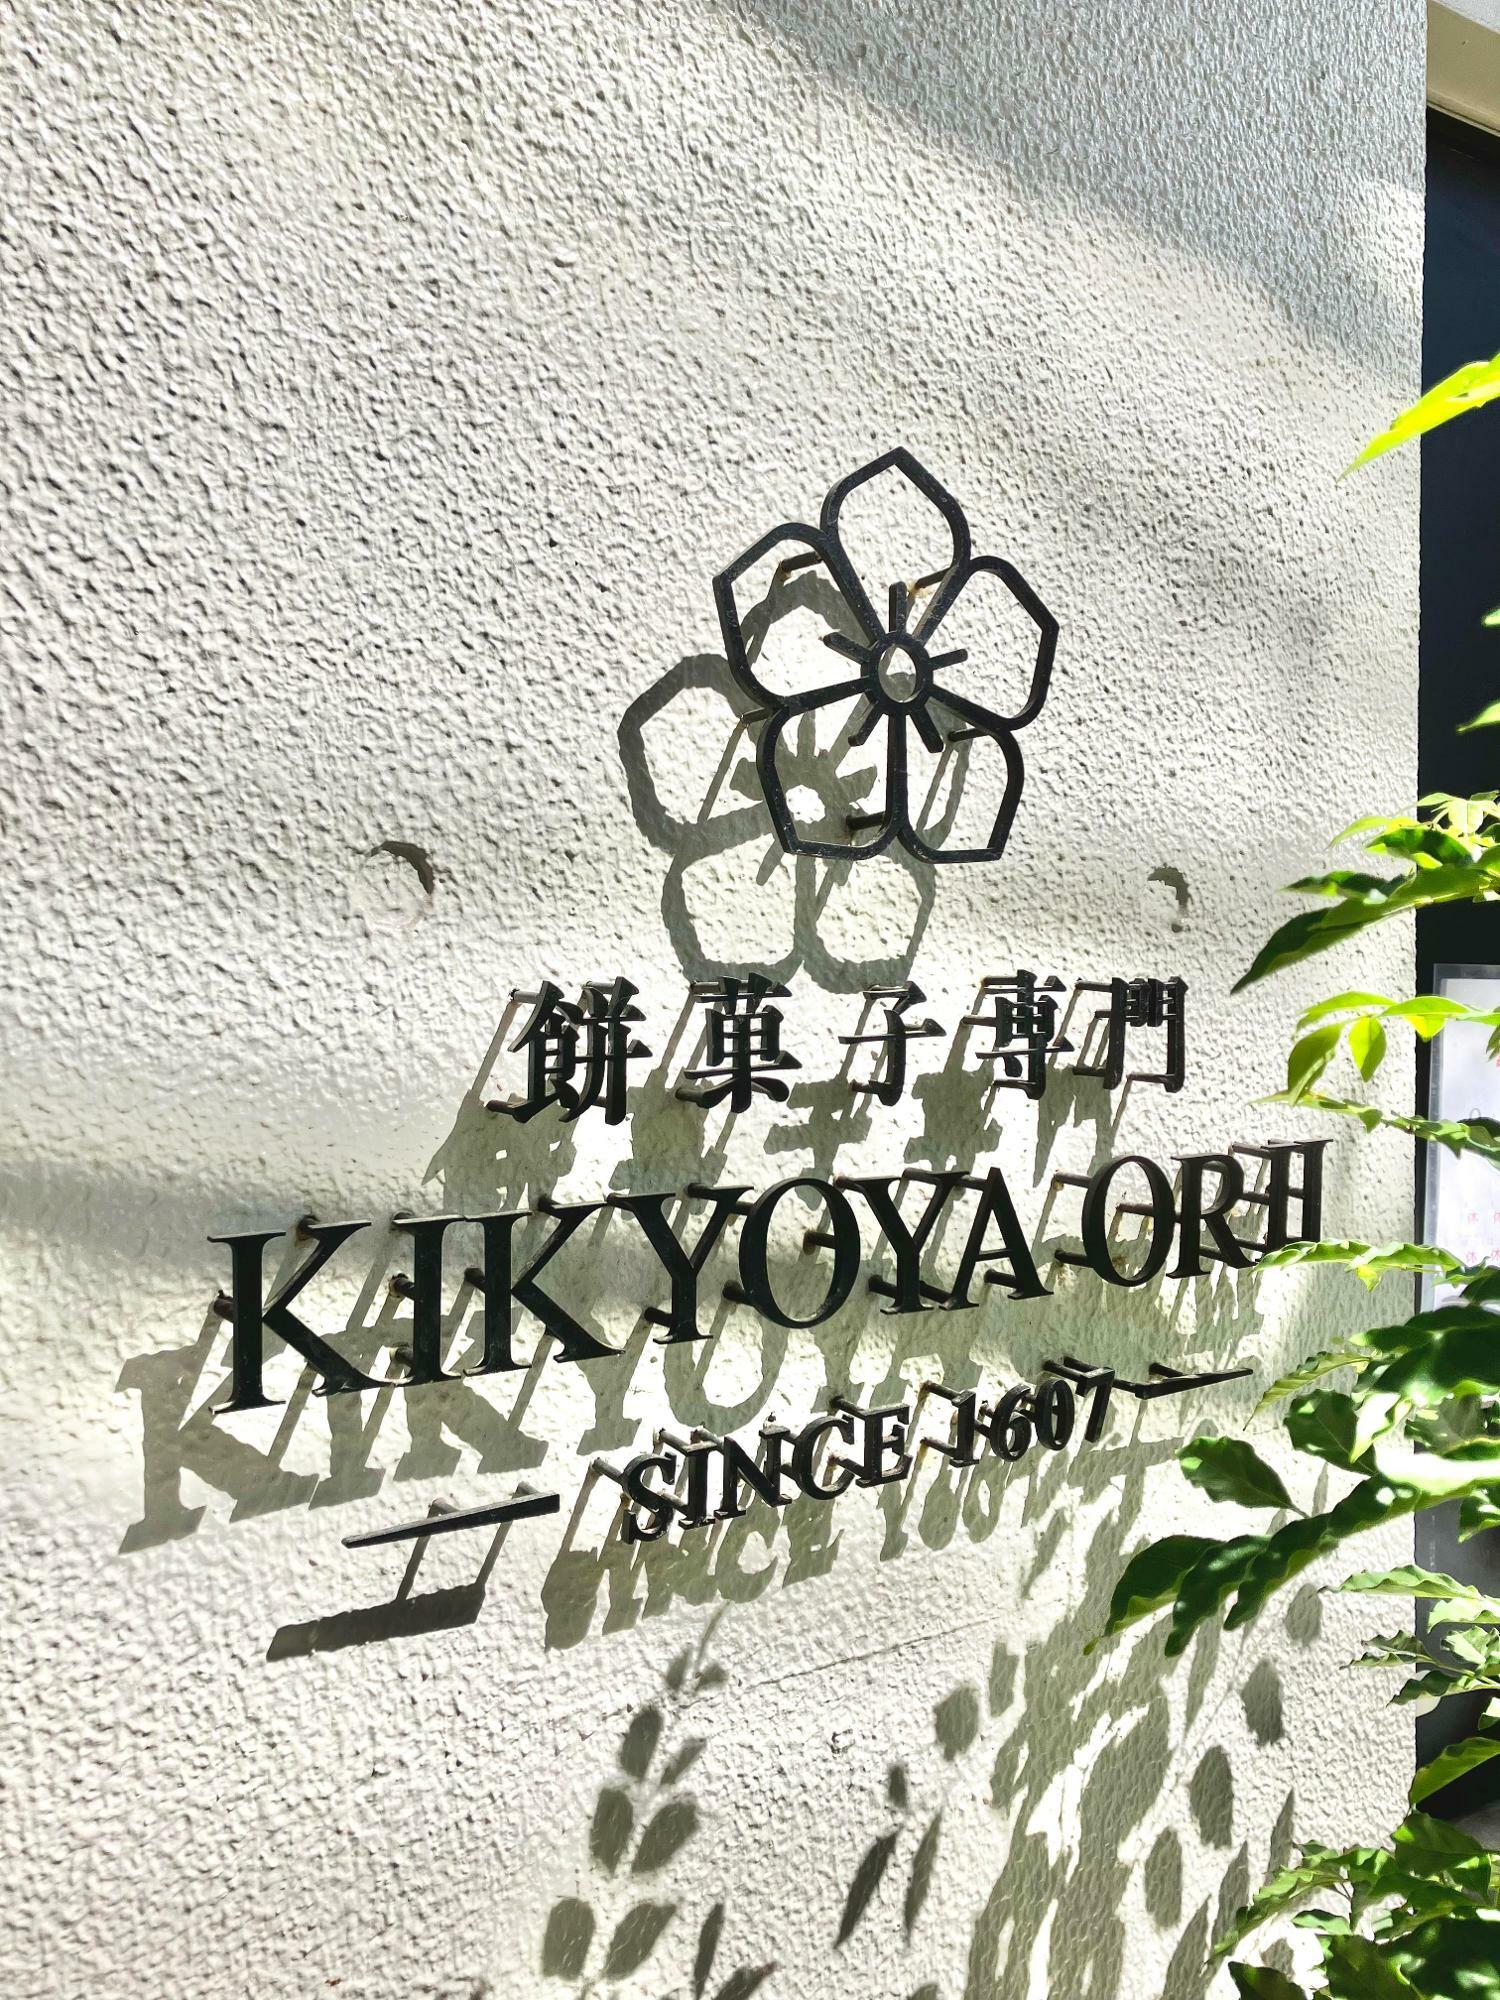 KIKYOYA‐ORIIさん 外壁